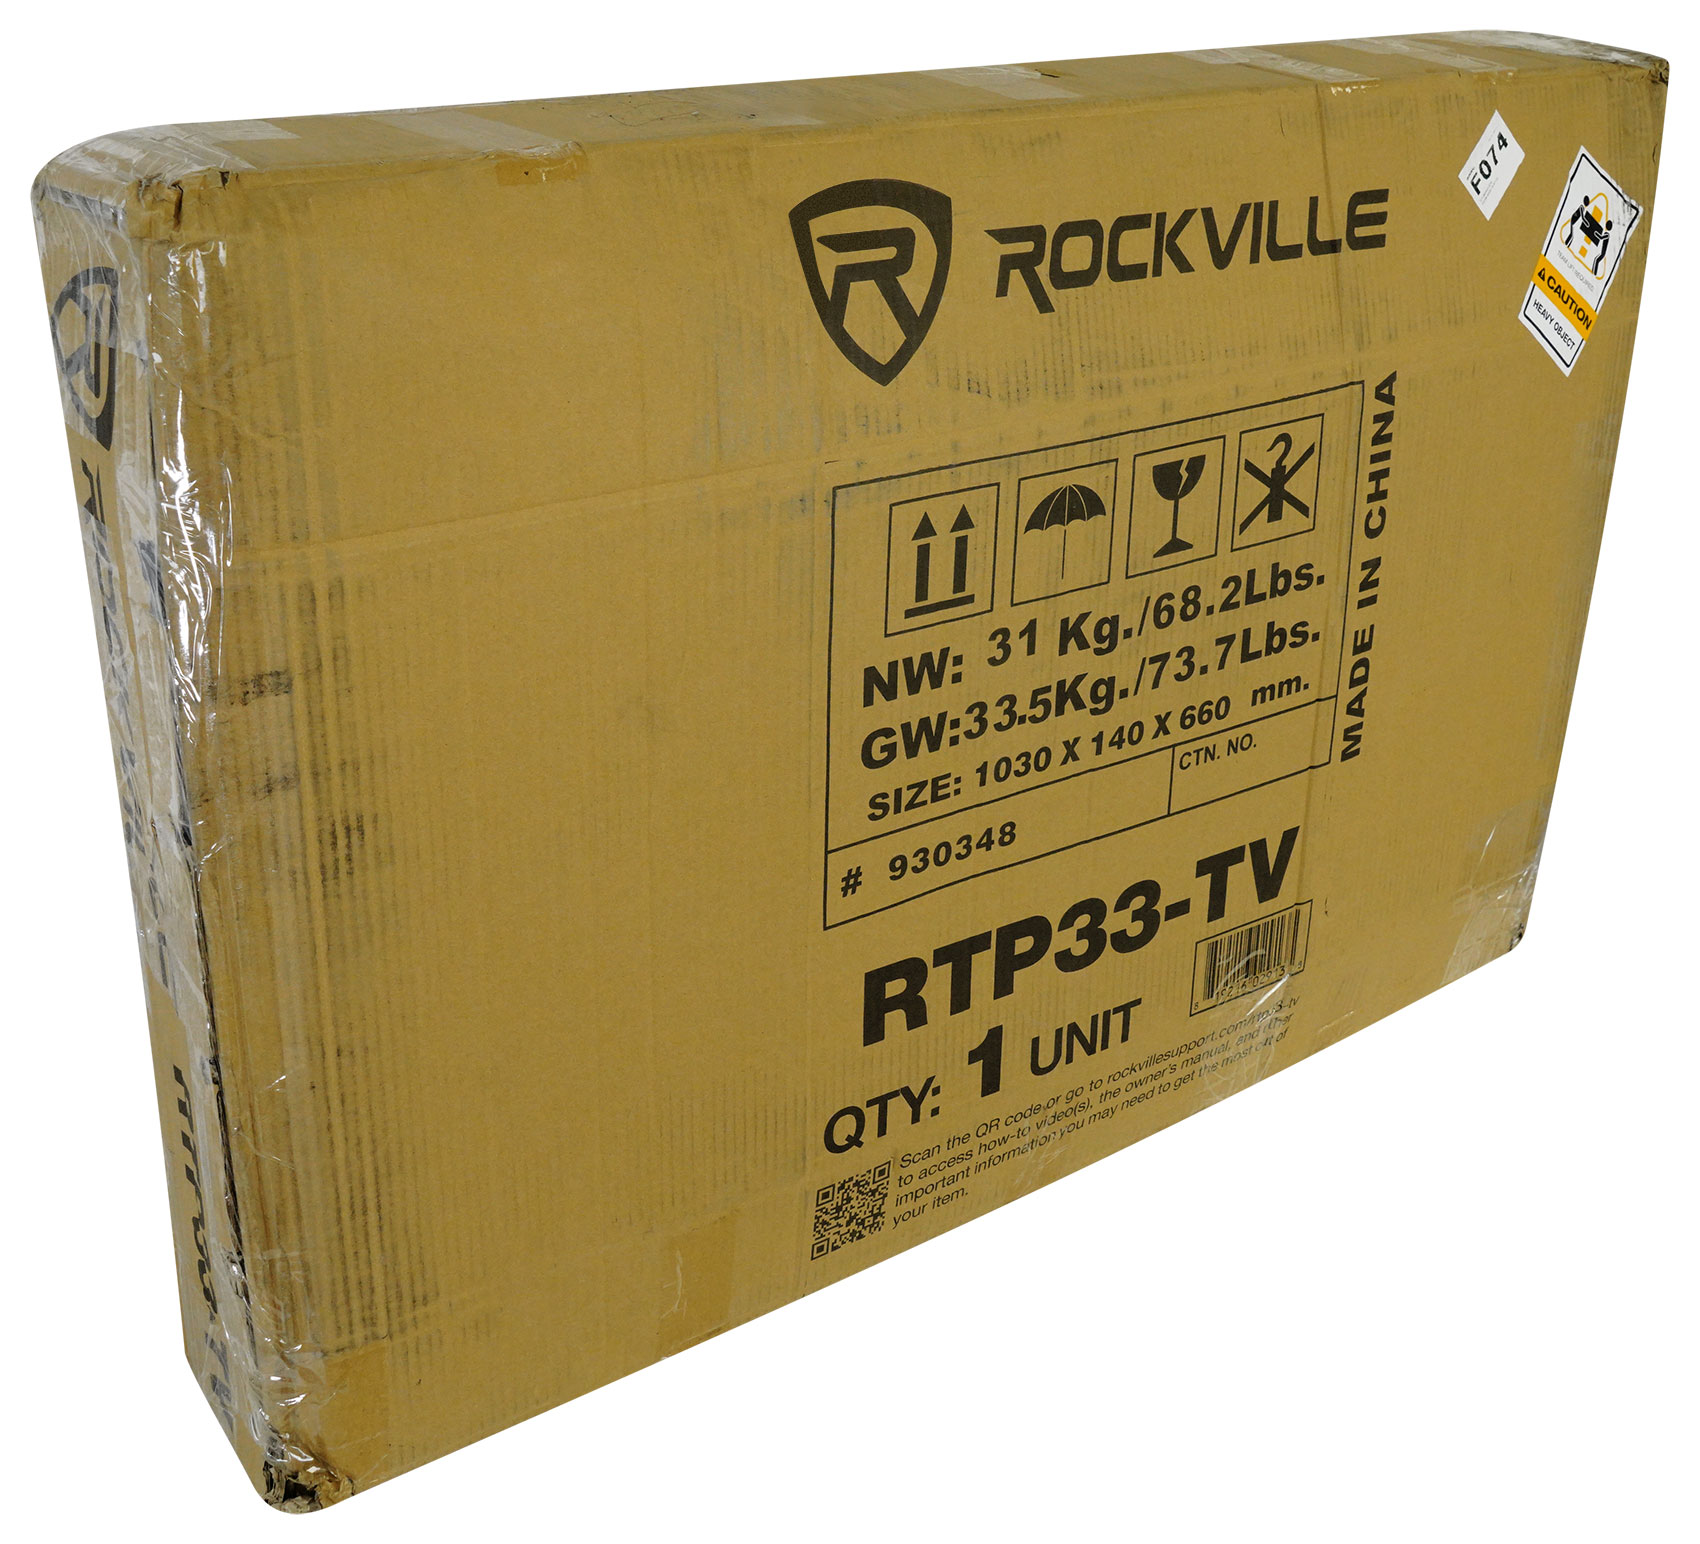 (2) Rockville RTP33-TV White/Black Totem DJ Speaker/Lighting Stands w/ TV Mount - image 3 of 19